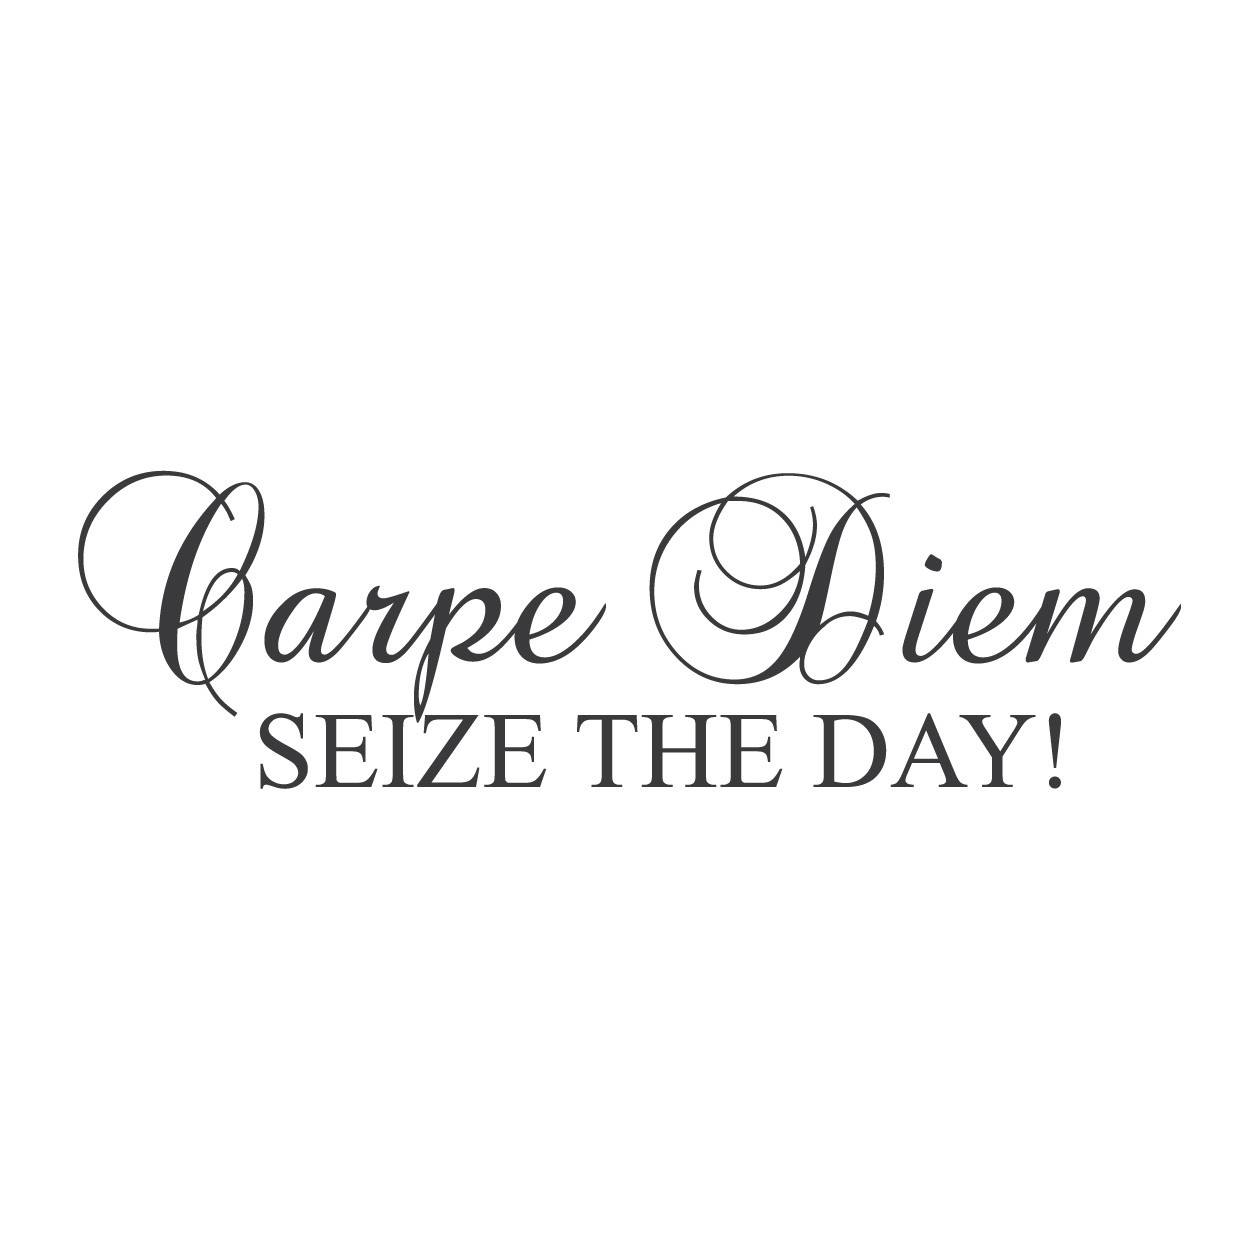 Carpe Diem Club - Seize the day!